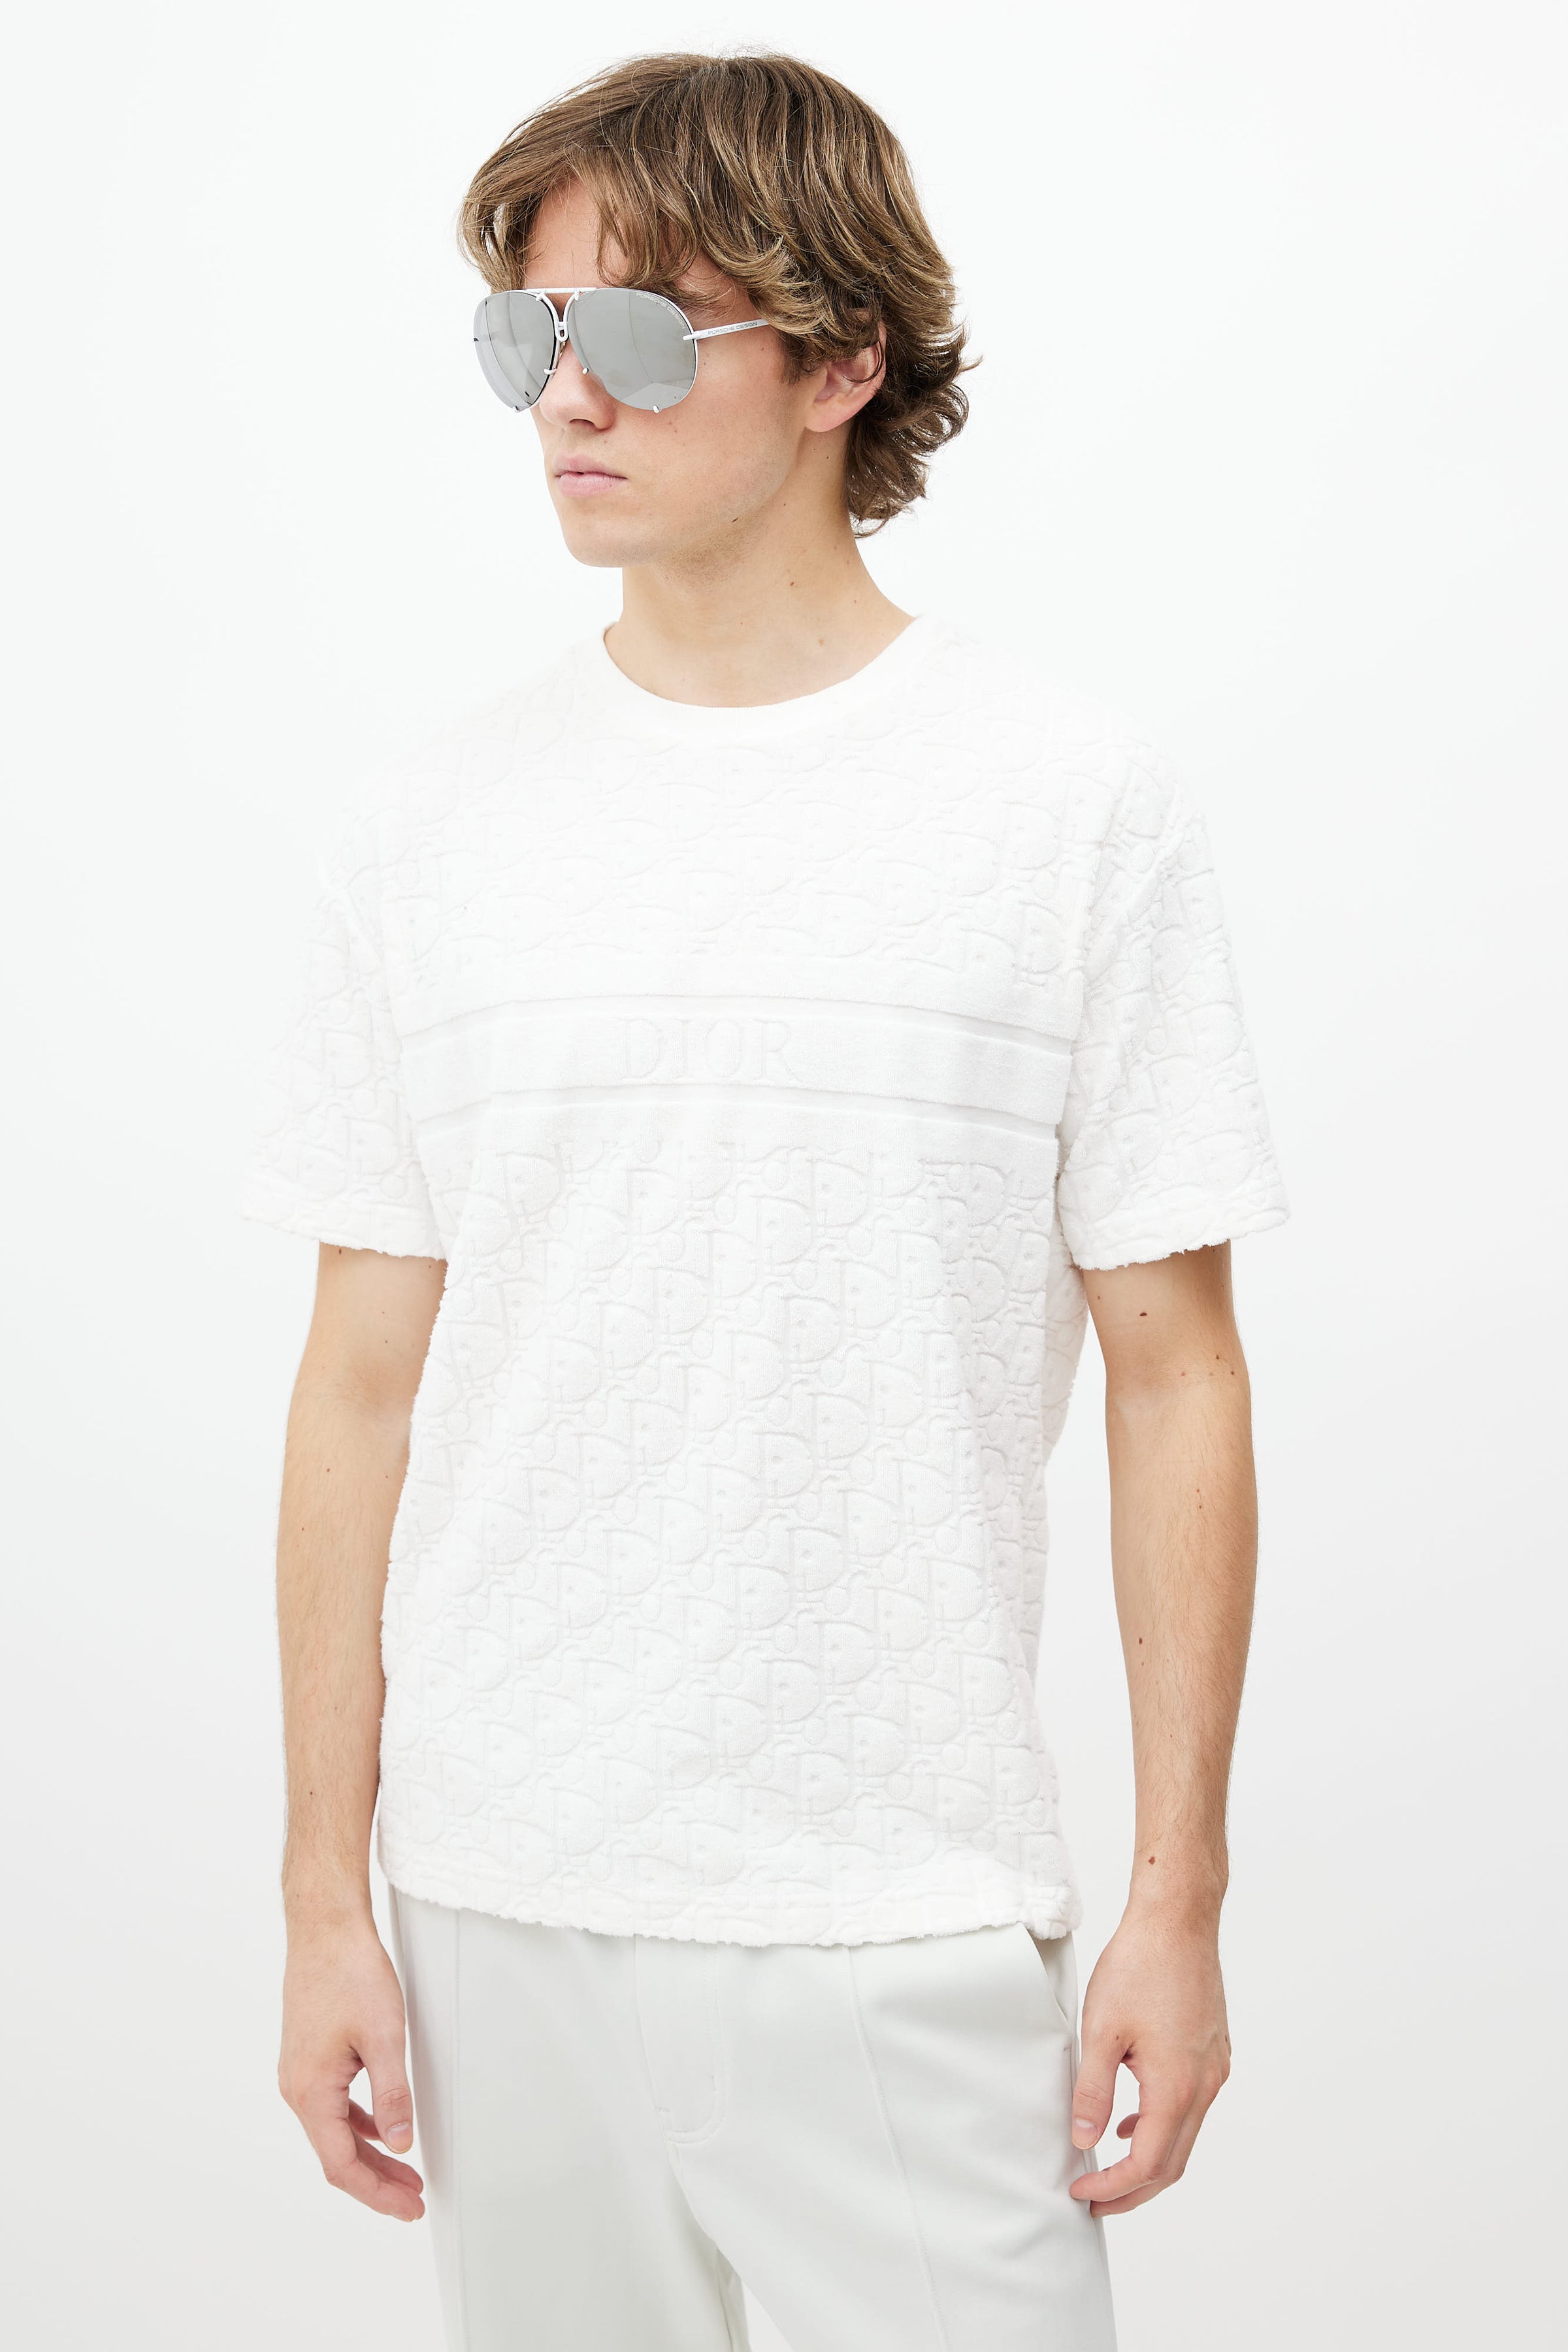 Dior Oblique Polo Shirt in White for Men